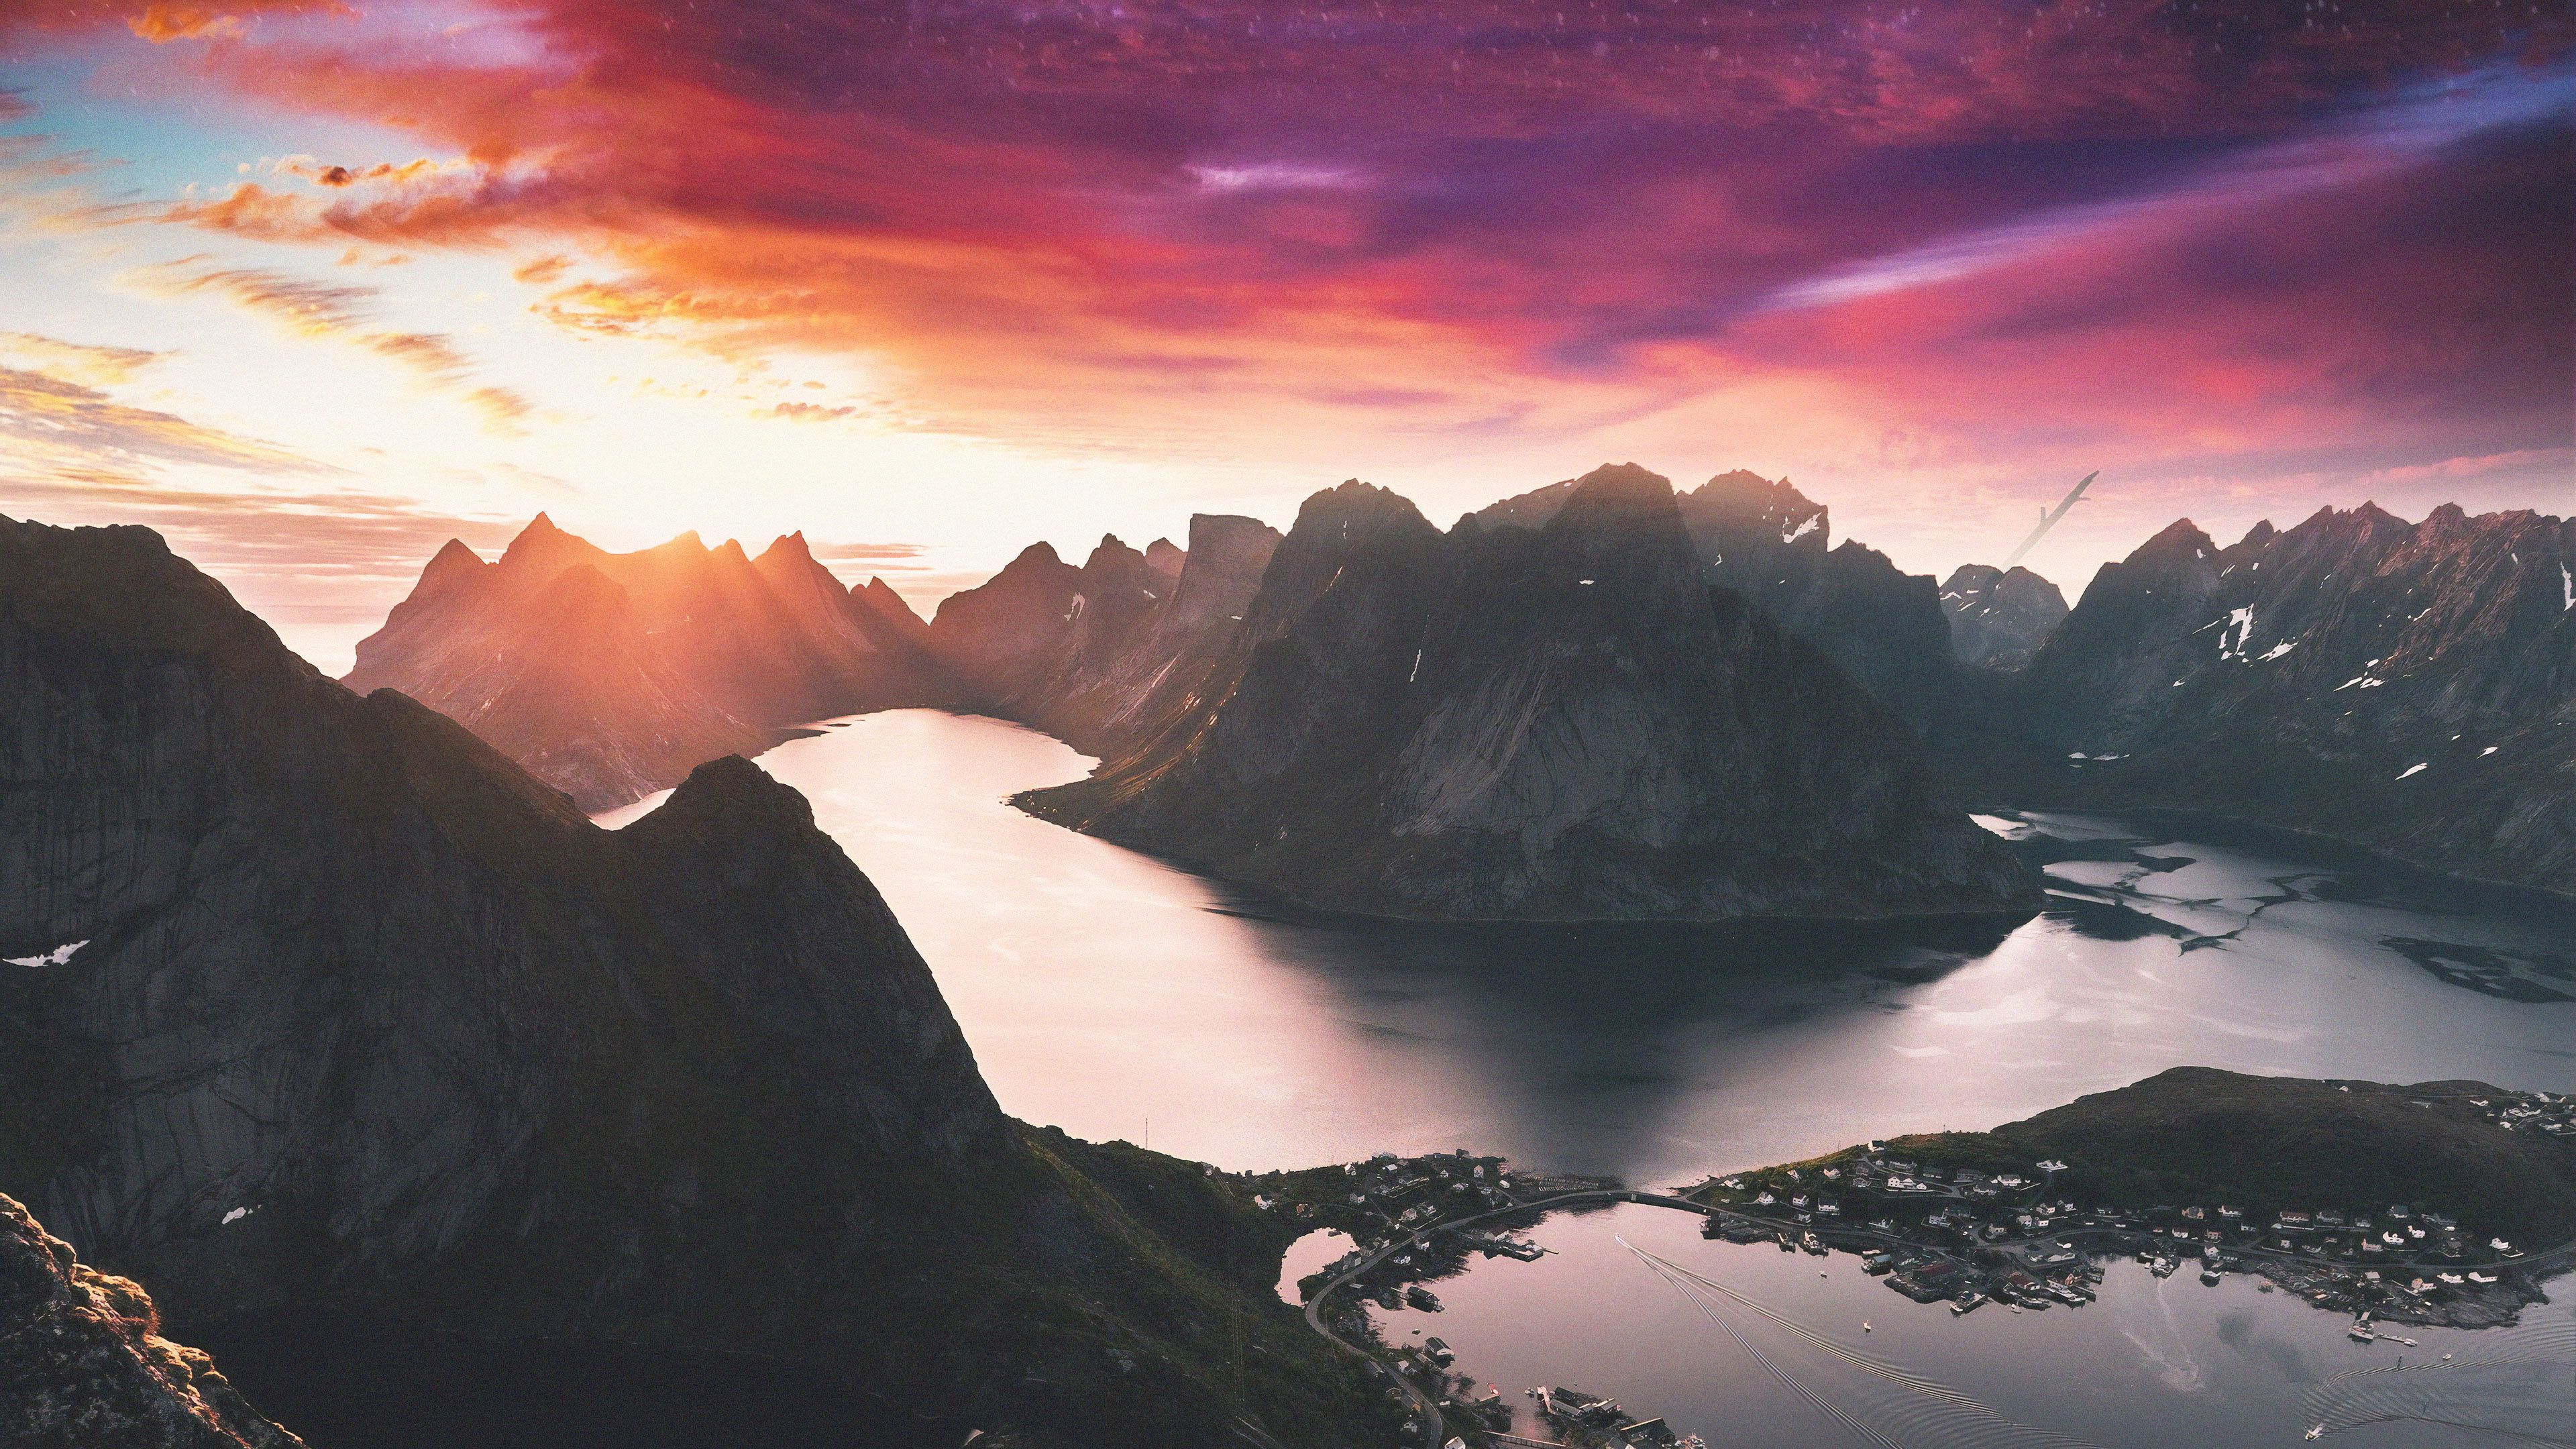 Download 3840x2160 wallpaper beautiful mountains, sunset, scenery